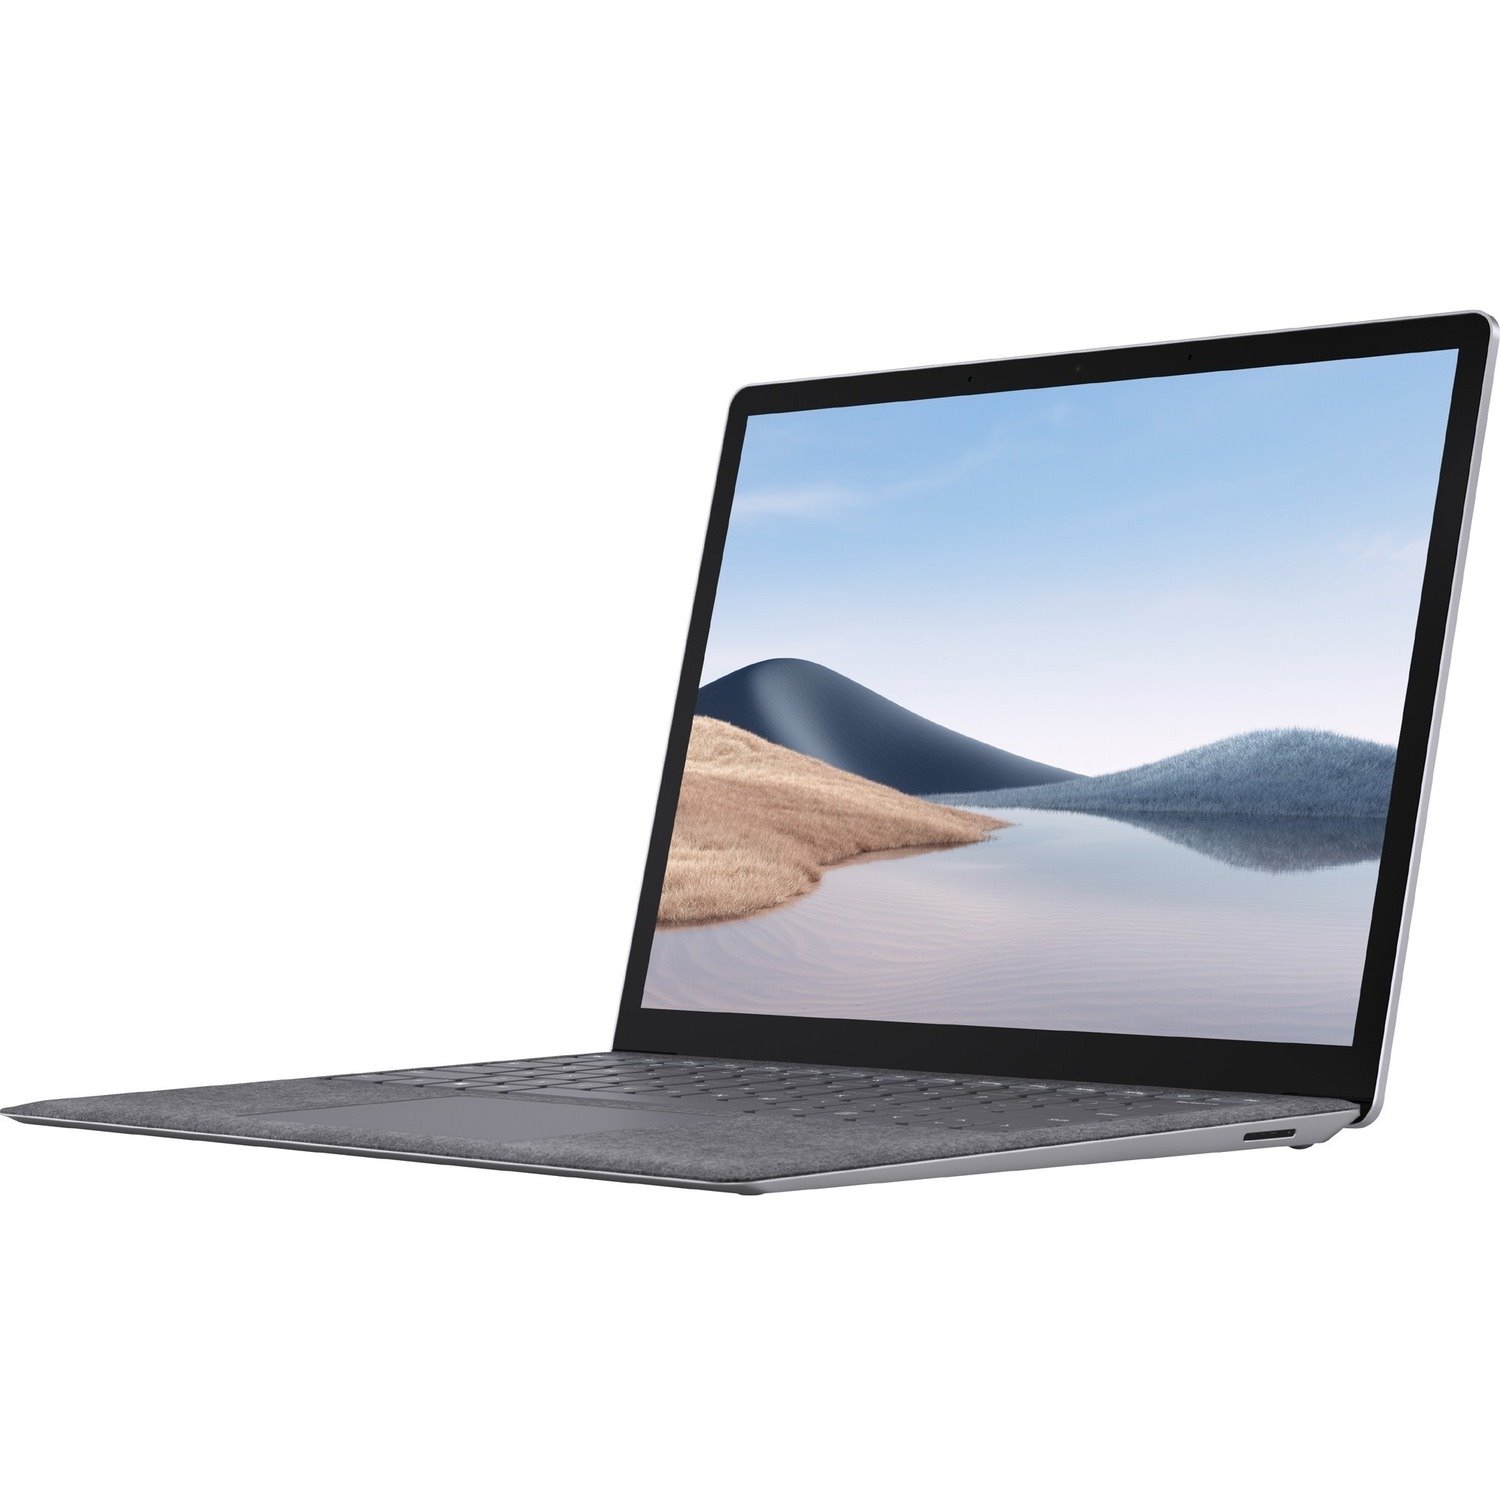 Microsoft Surface Laptop 4 34.3 cm (13.5") Touchscreen Notebook - 2256 x 1504 - AMD Ryzen 5 - 8 GB Total RAM - 256 GB SSD - Platinum